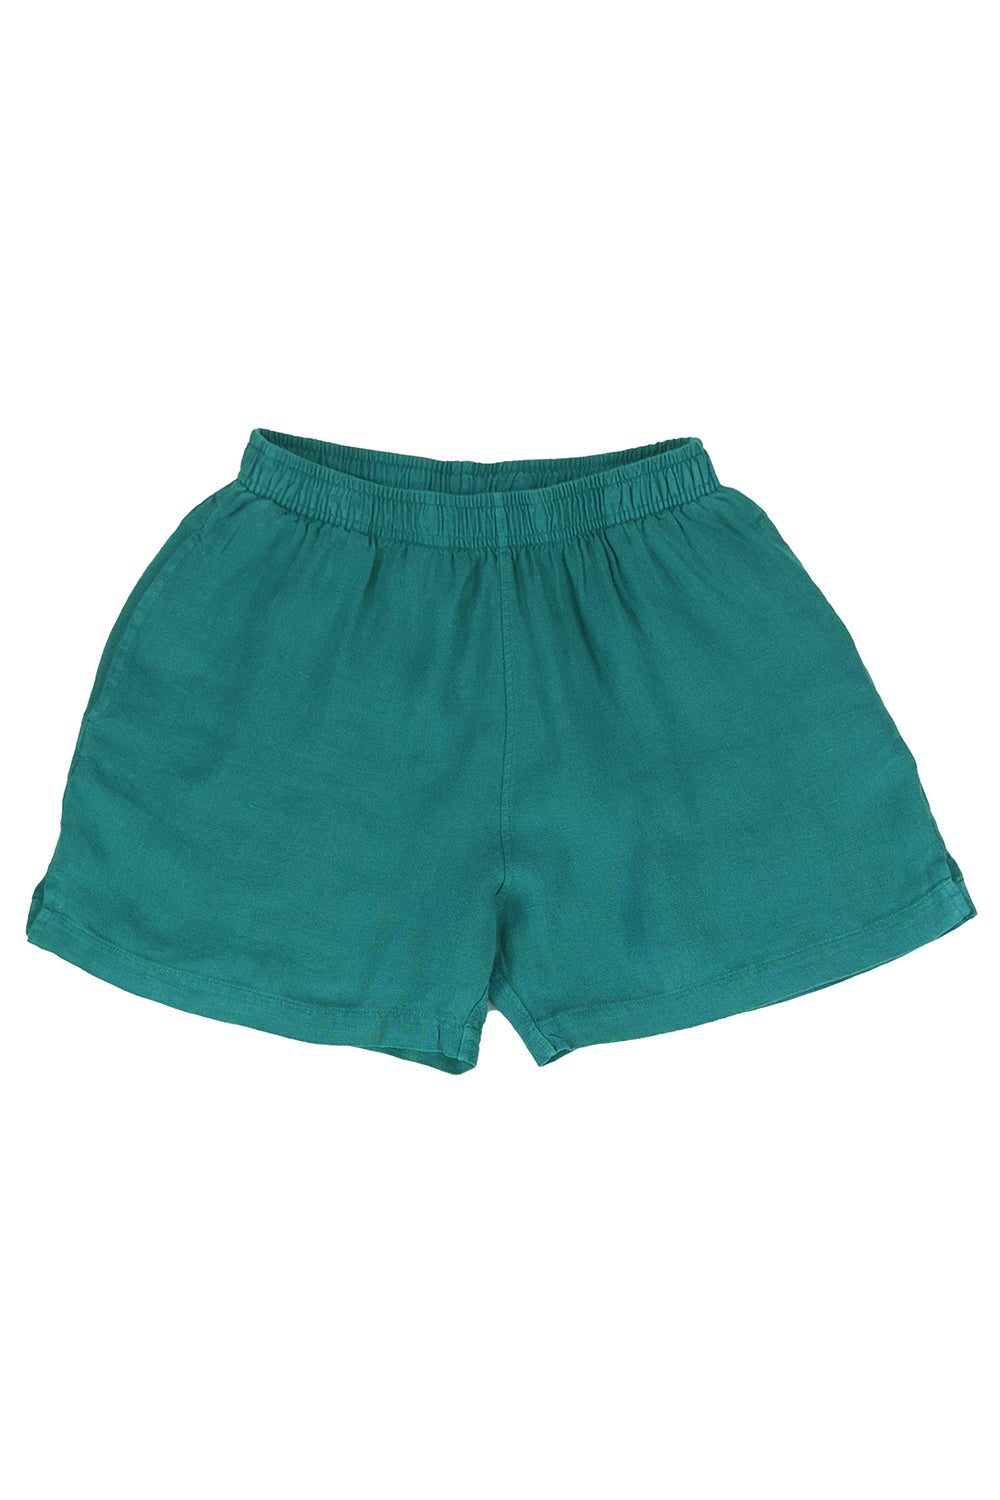 Makena 100% Hemp Short | Jungmaven Hemp Clothing & Accessories / Color: Ivy Green